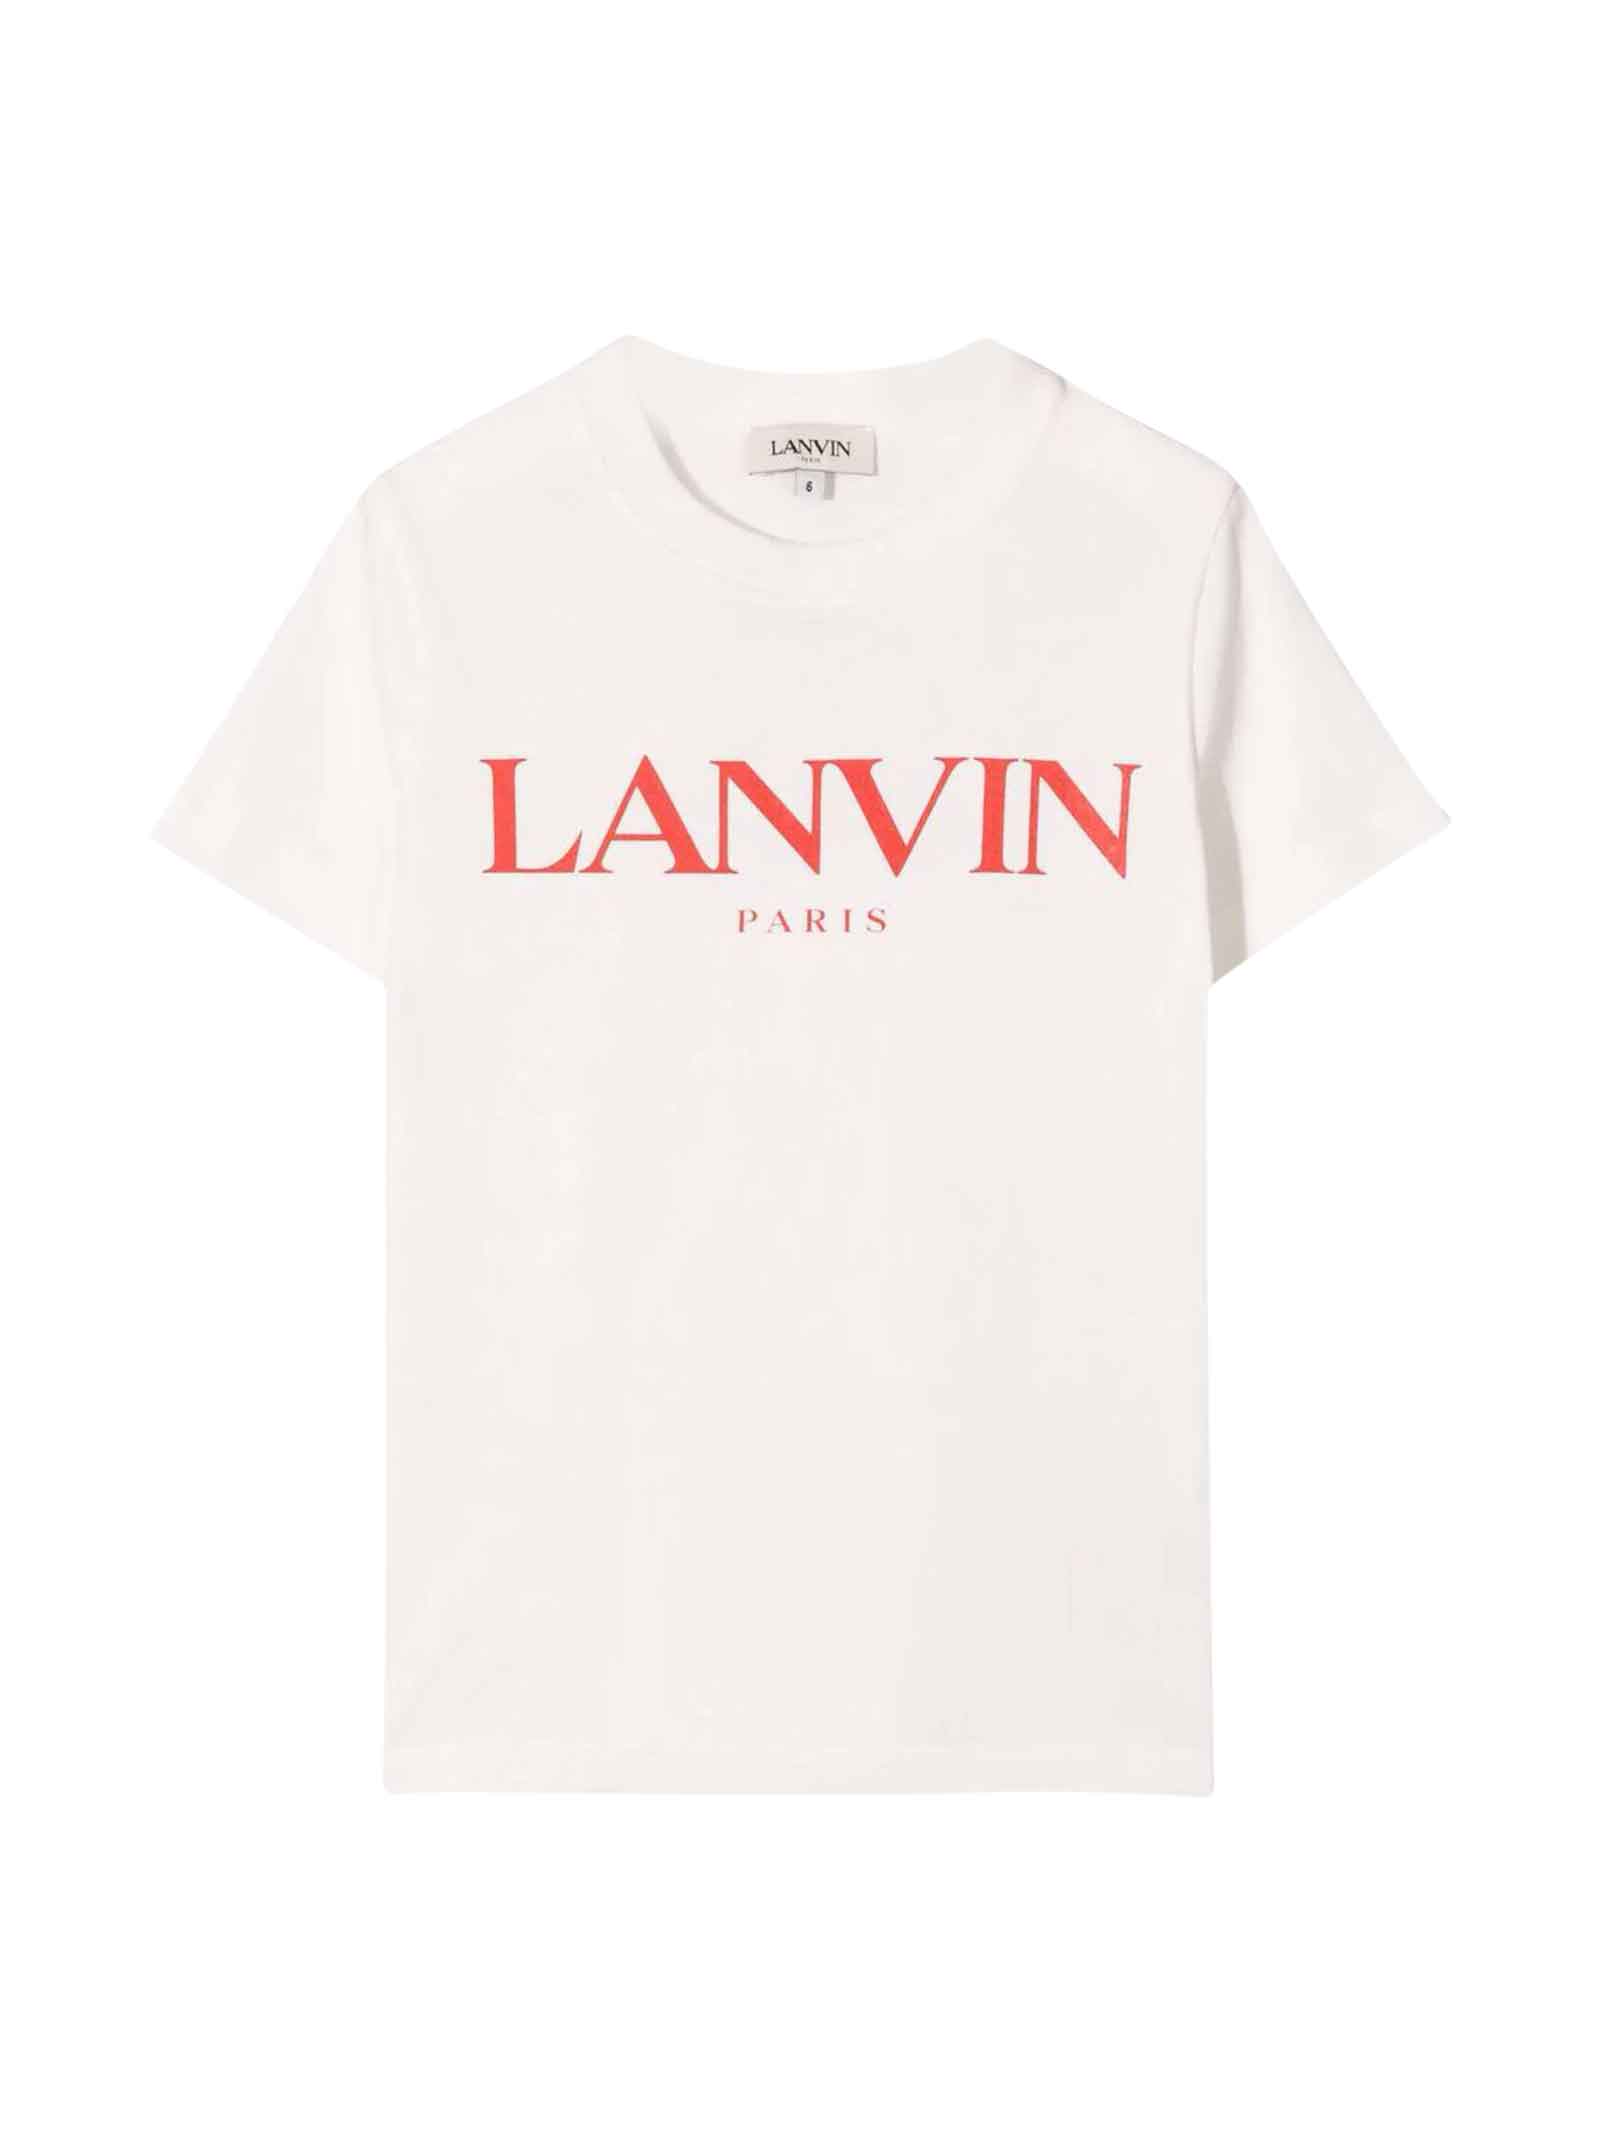 Lanvin Unisex White T-shirt